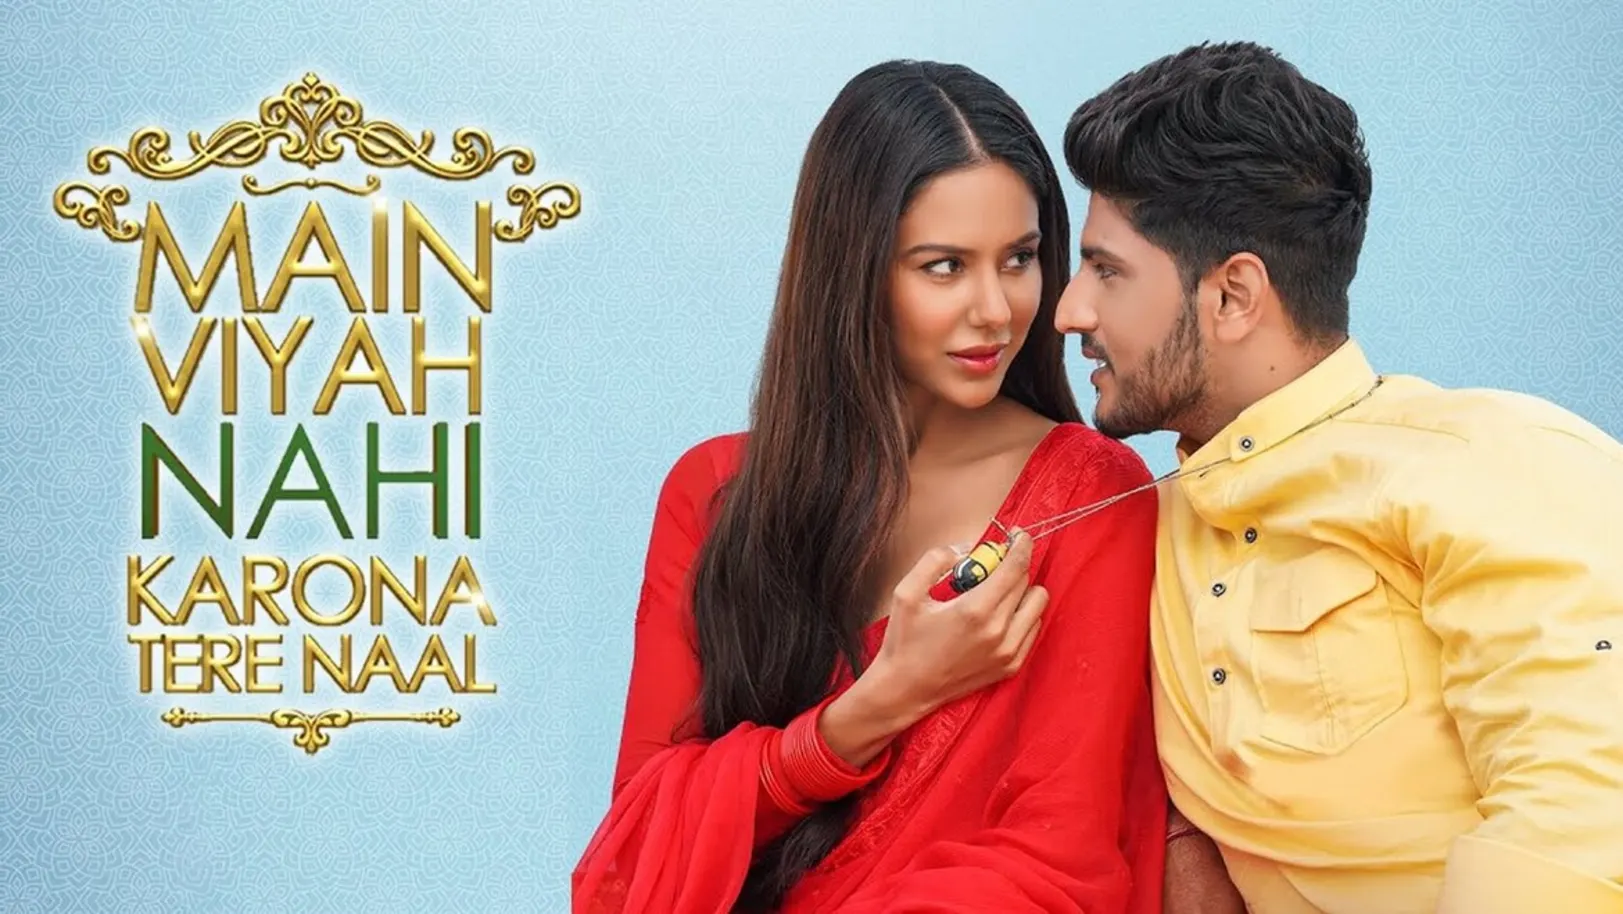 Main Viyah Nahi Karona Tere Naal Streaming Now On Zee Punjabi